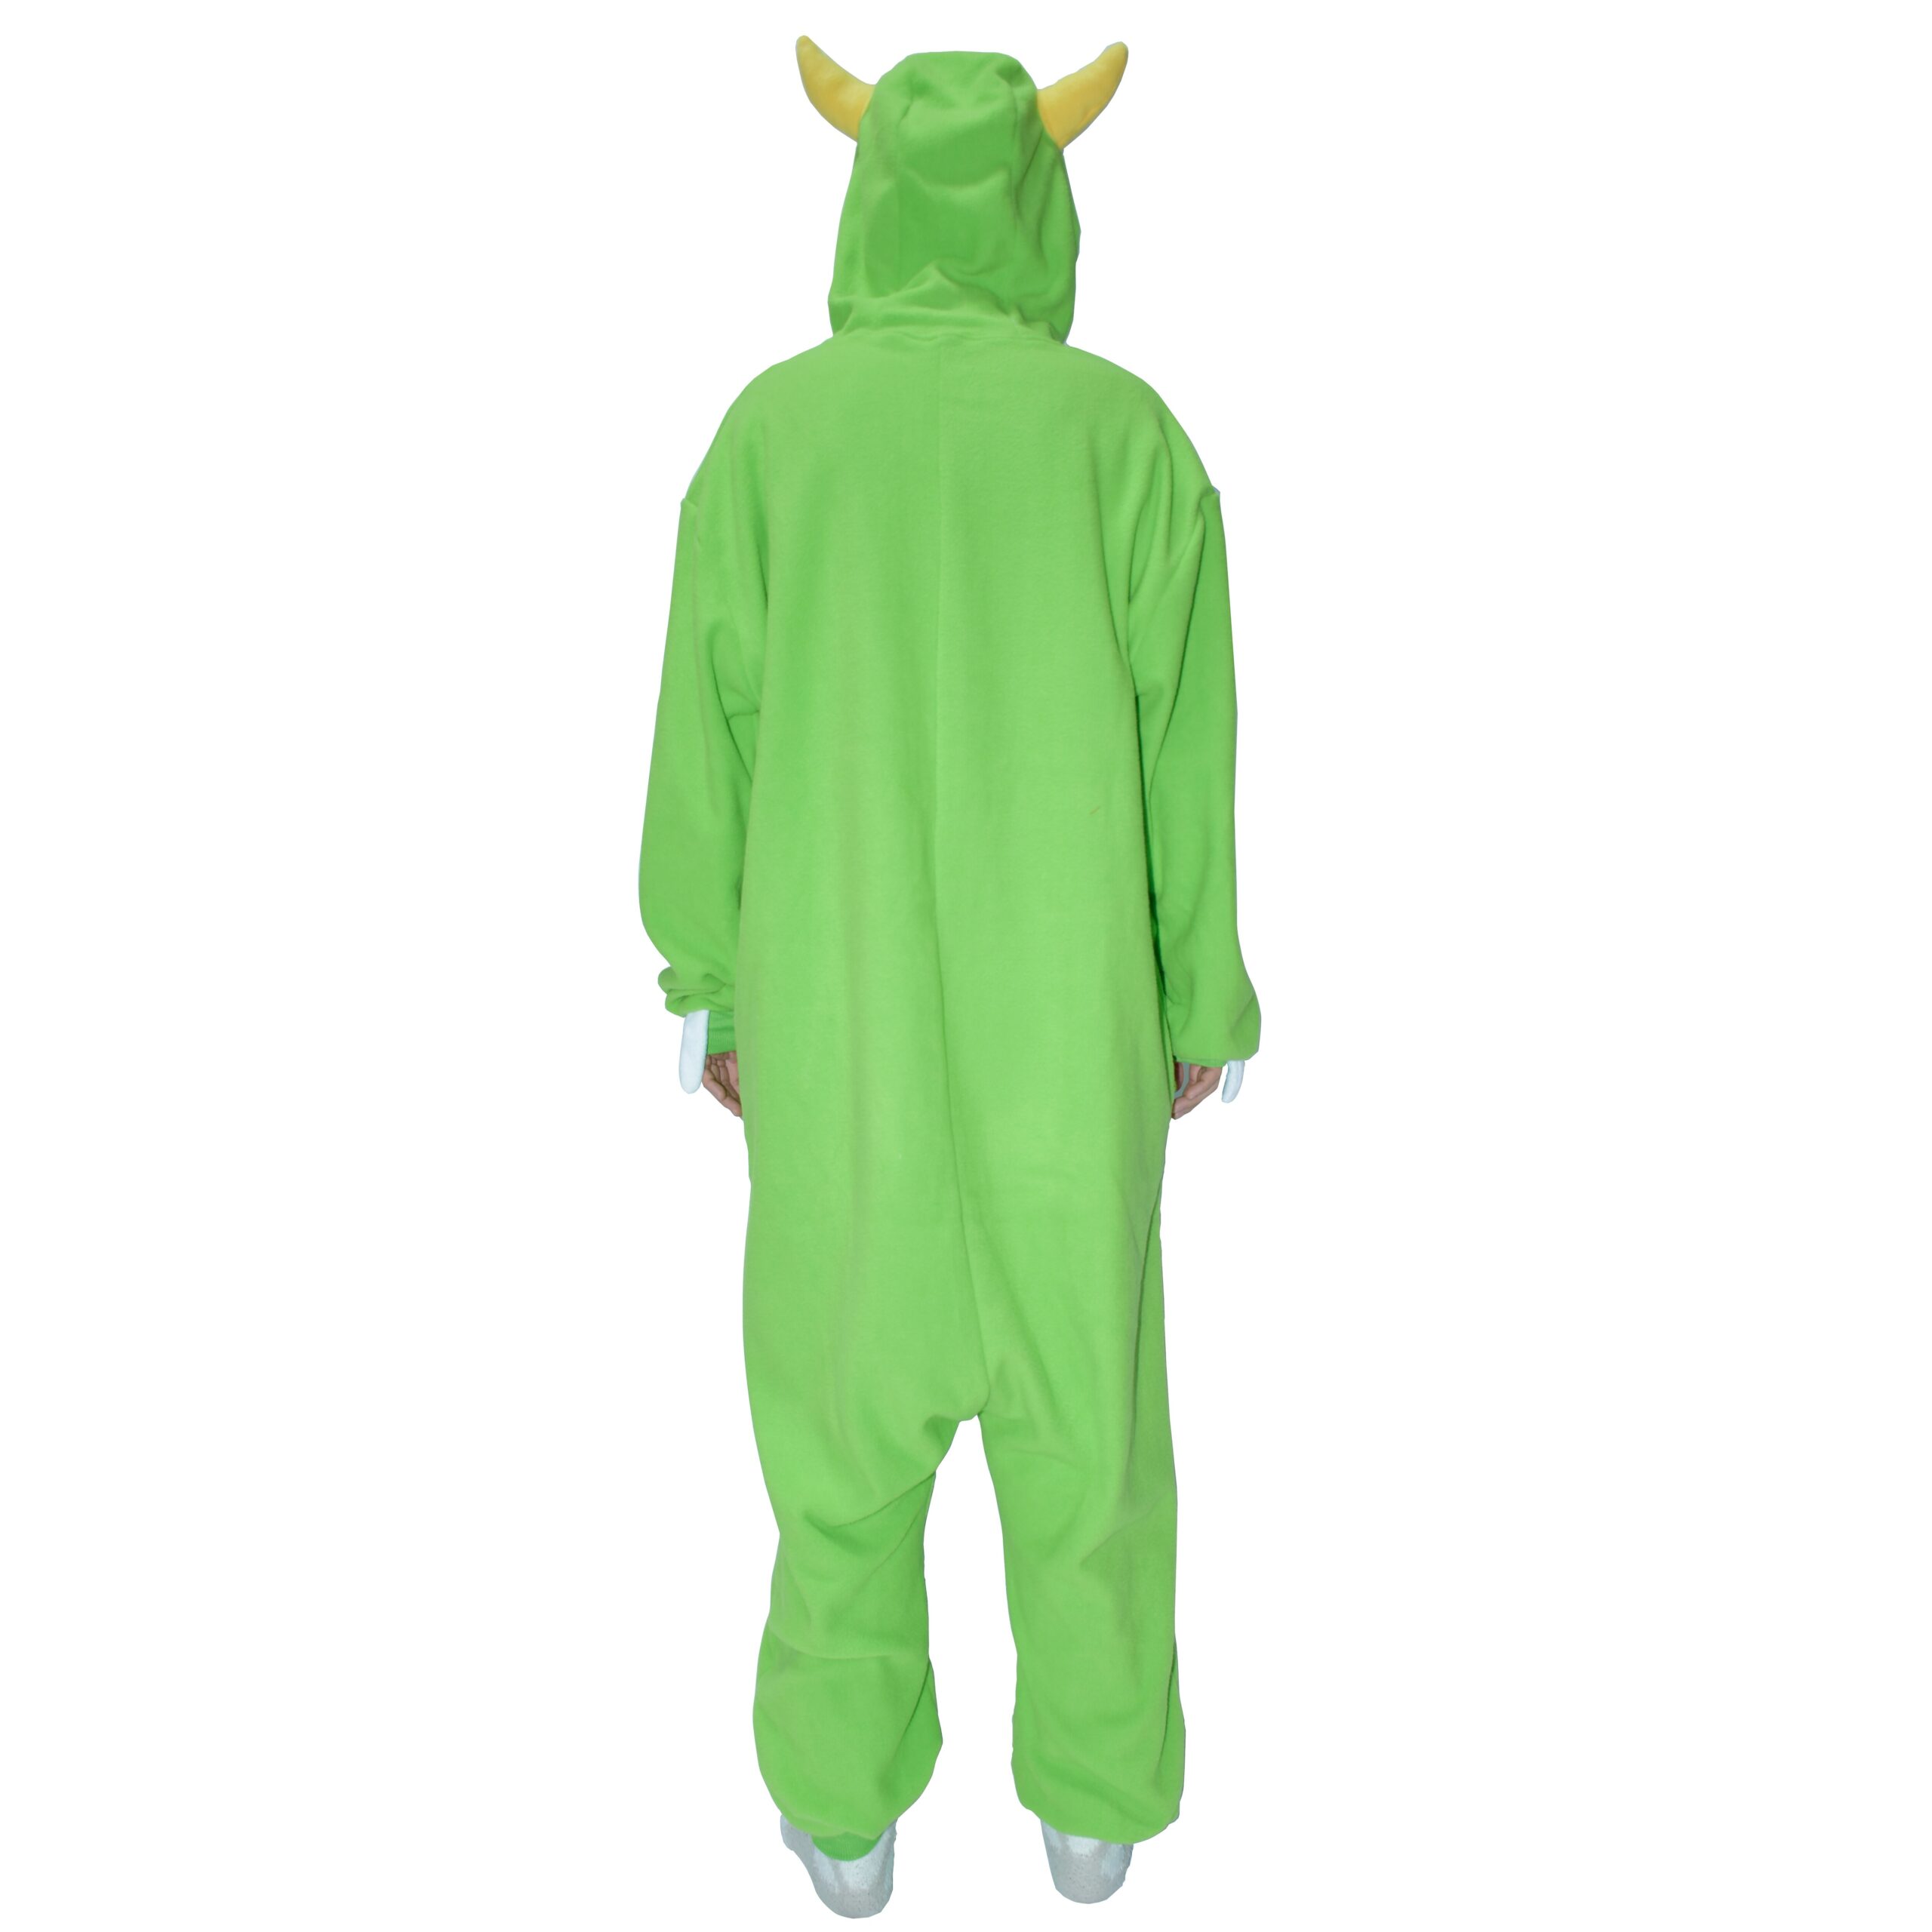 Mike Monster Jumpsuit Polar Fleece Sleepwear Unisex Winter Onesie Homewear Halloween Funny Cospaly Costume Cartoon Animal Outfit